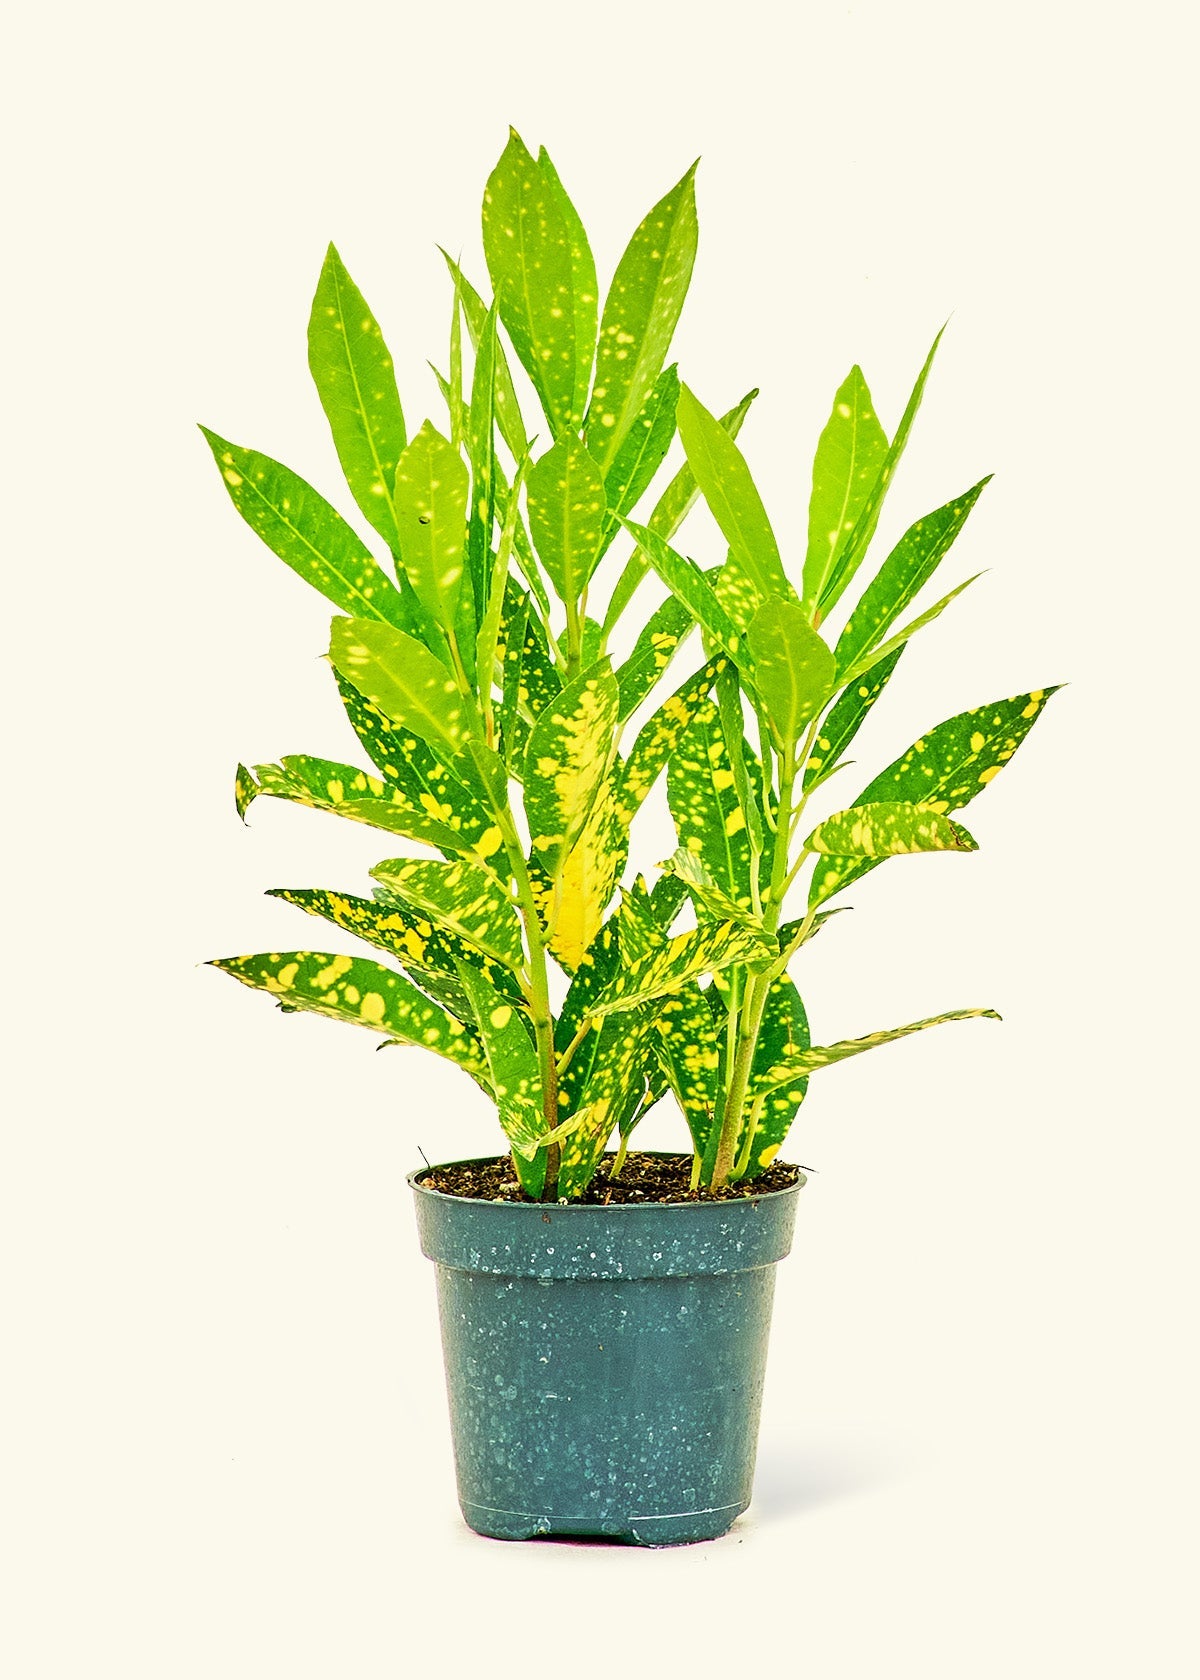 Small Gold Dust Croton (Codiaeum variegatum) in a grow pot.